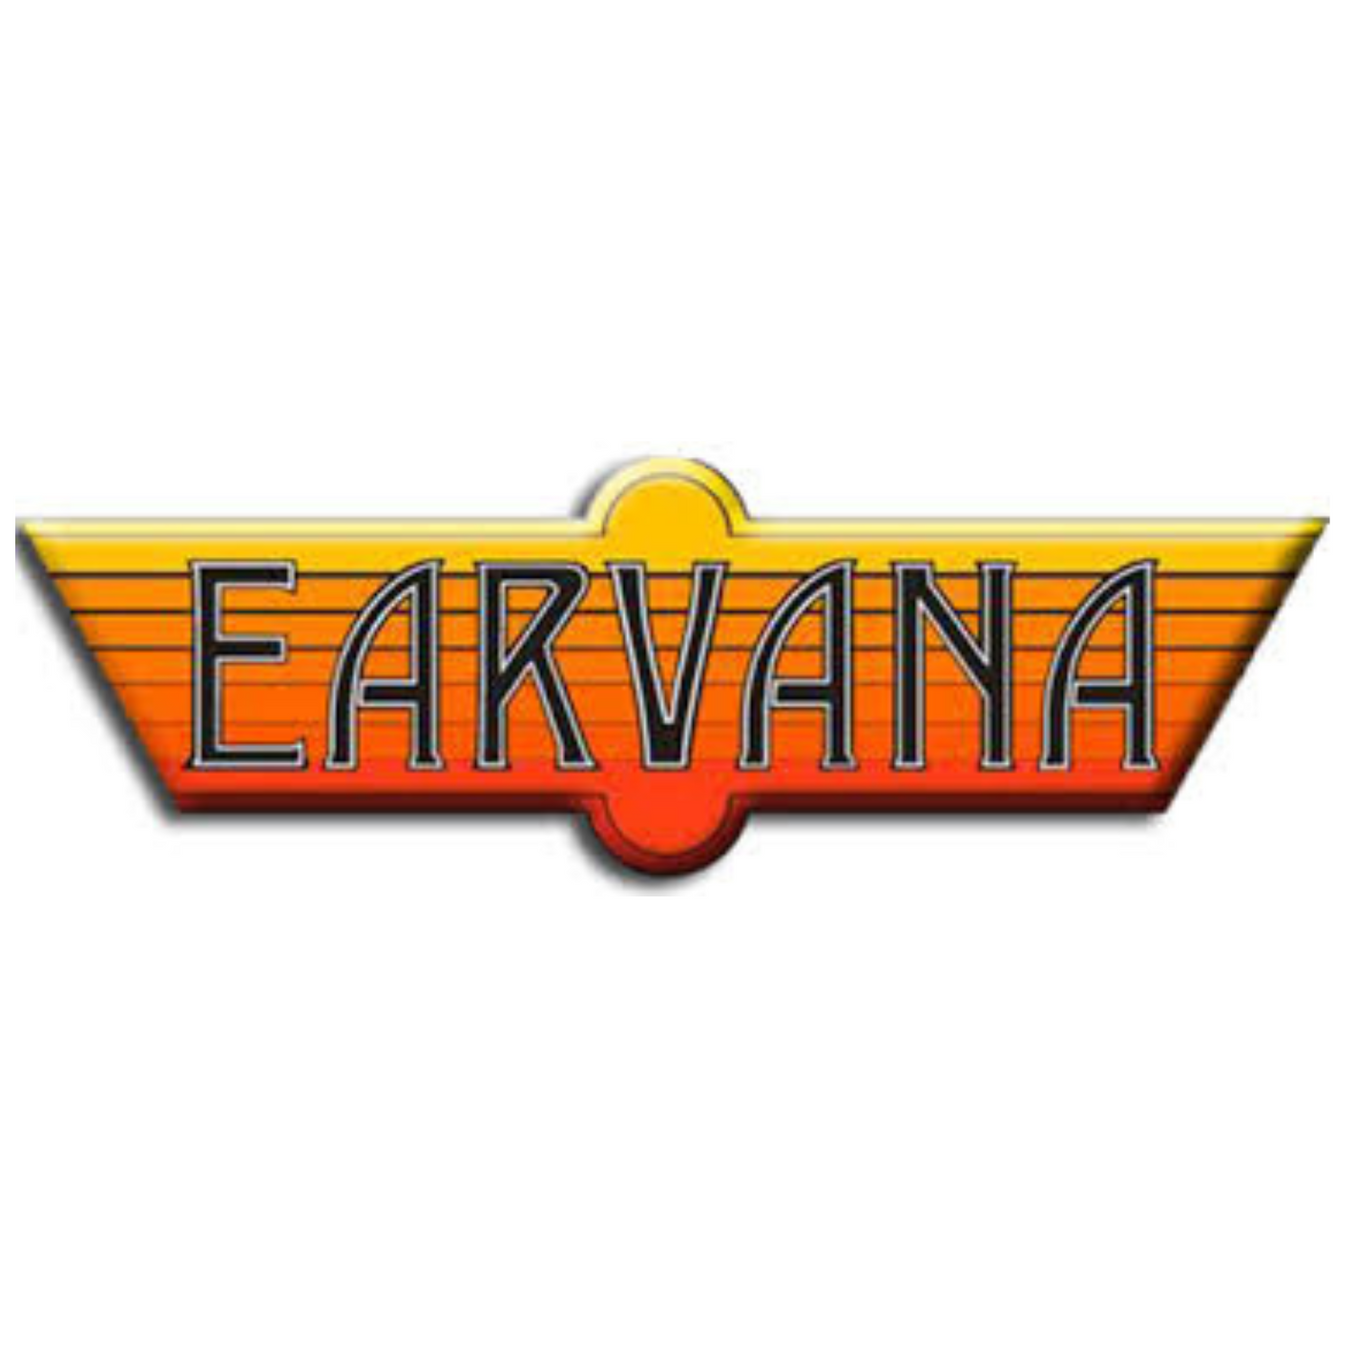 Earvana